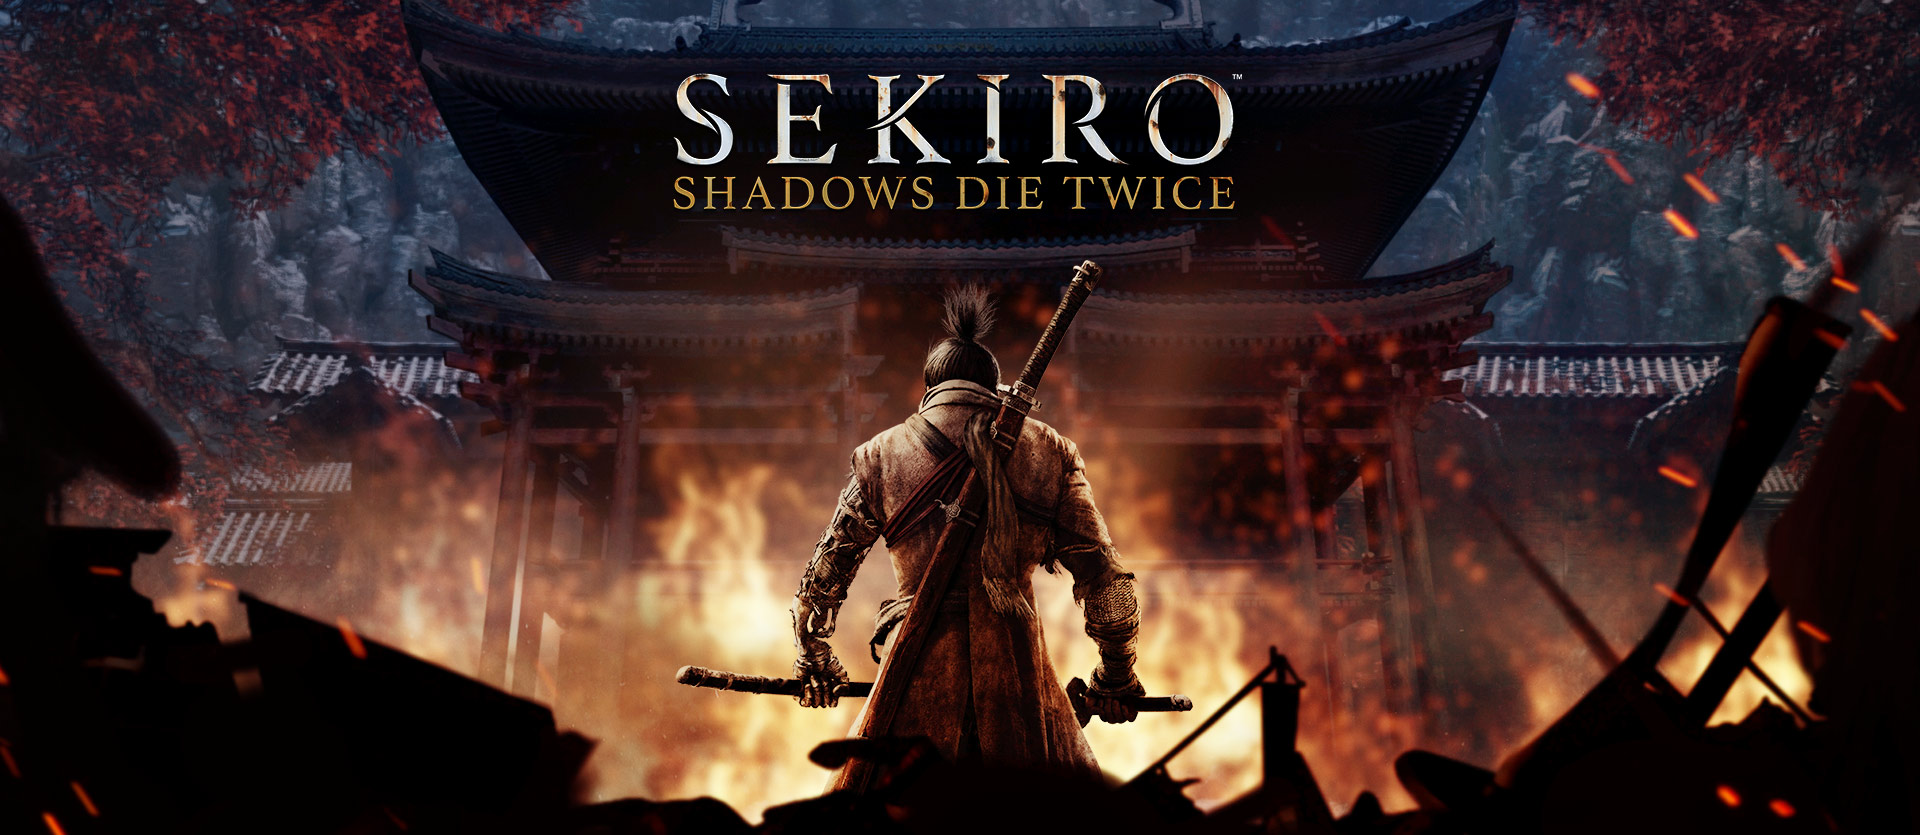 sekiro die twice download free